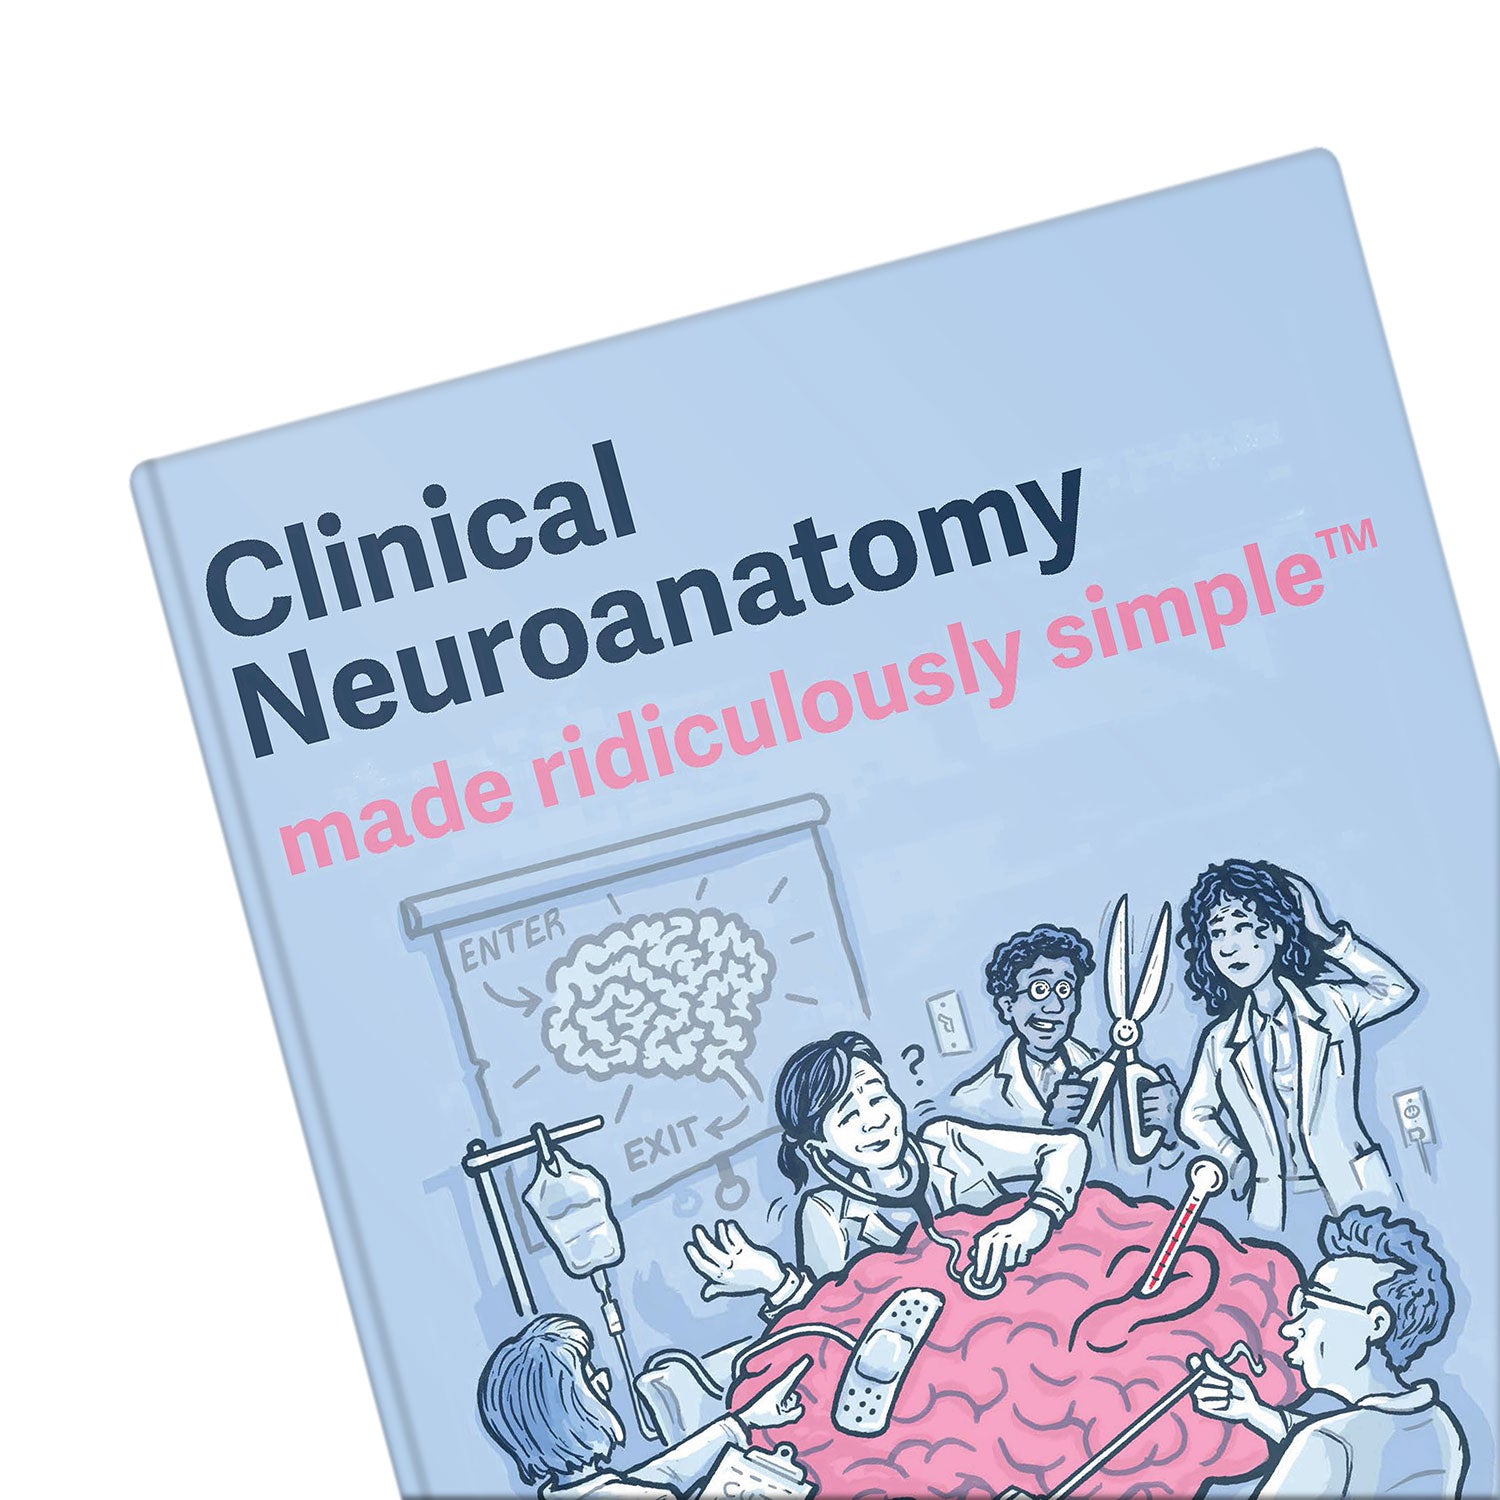 Clinical Neuroanatomy Made Ridiculously Simple